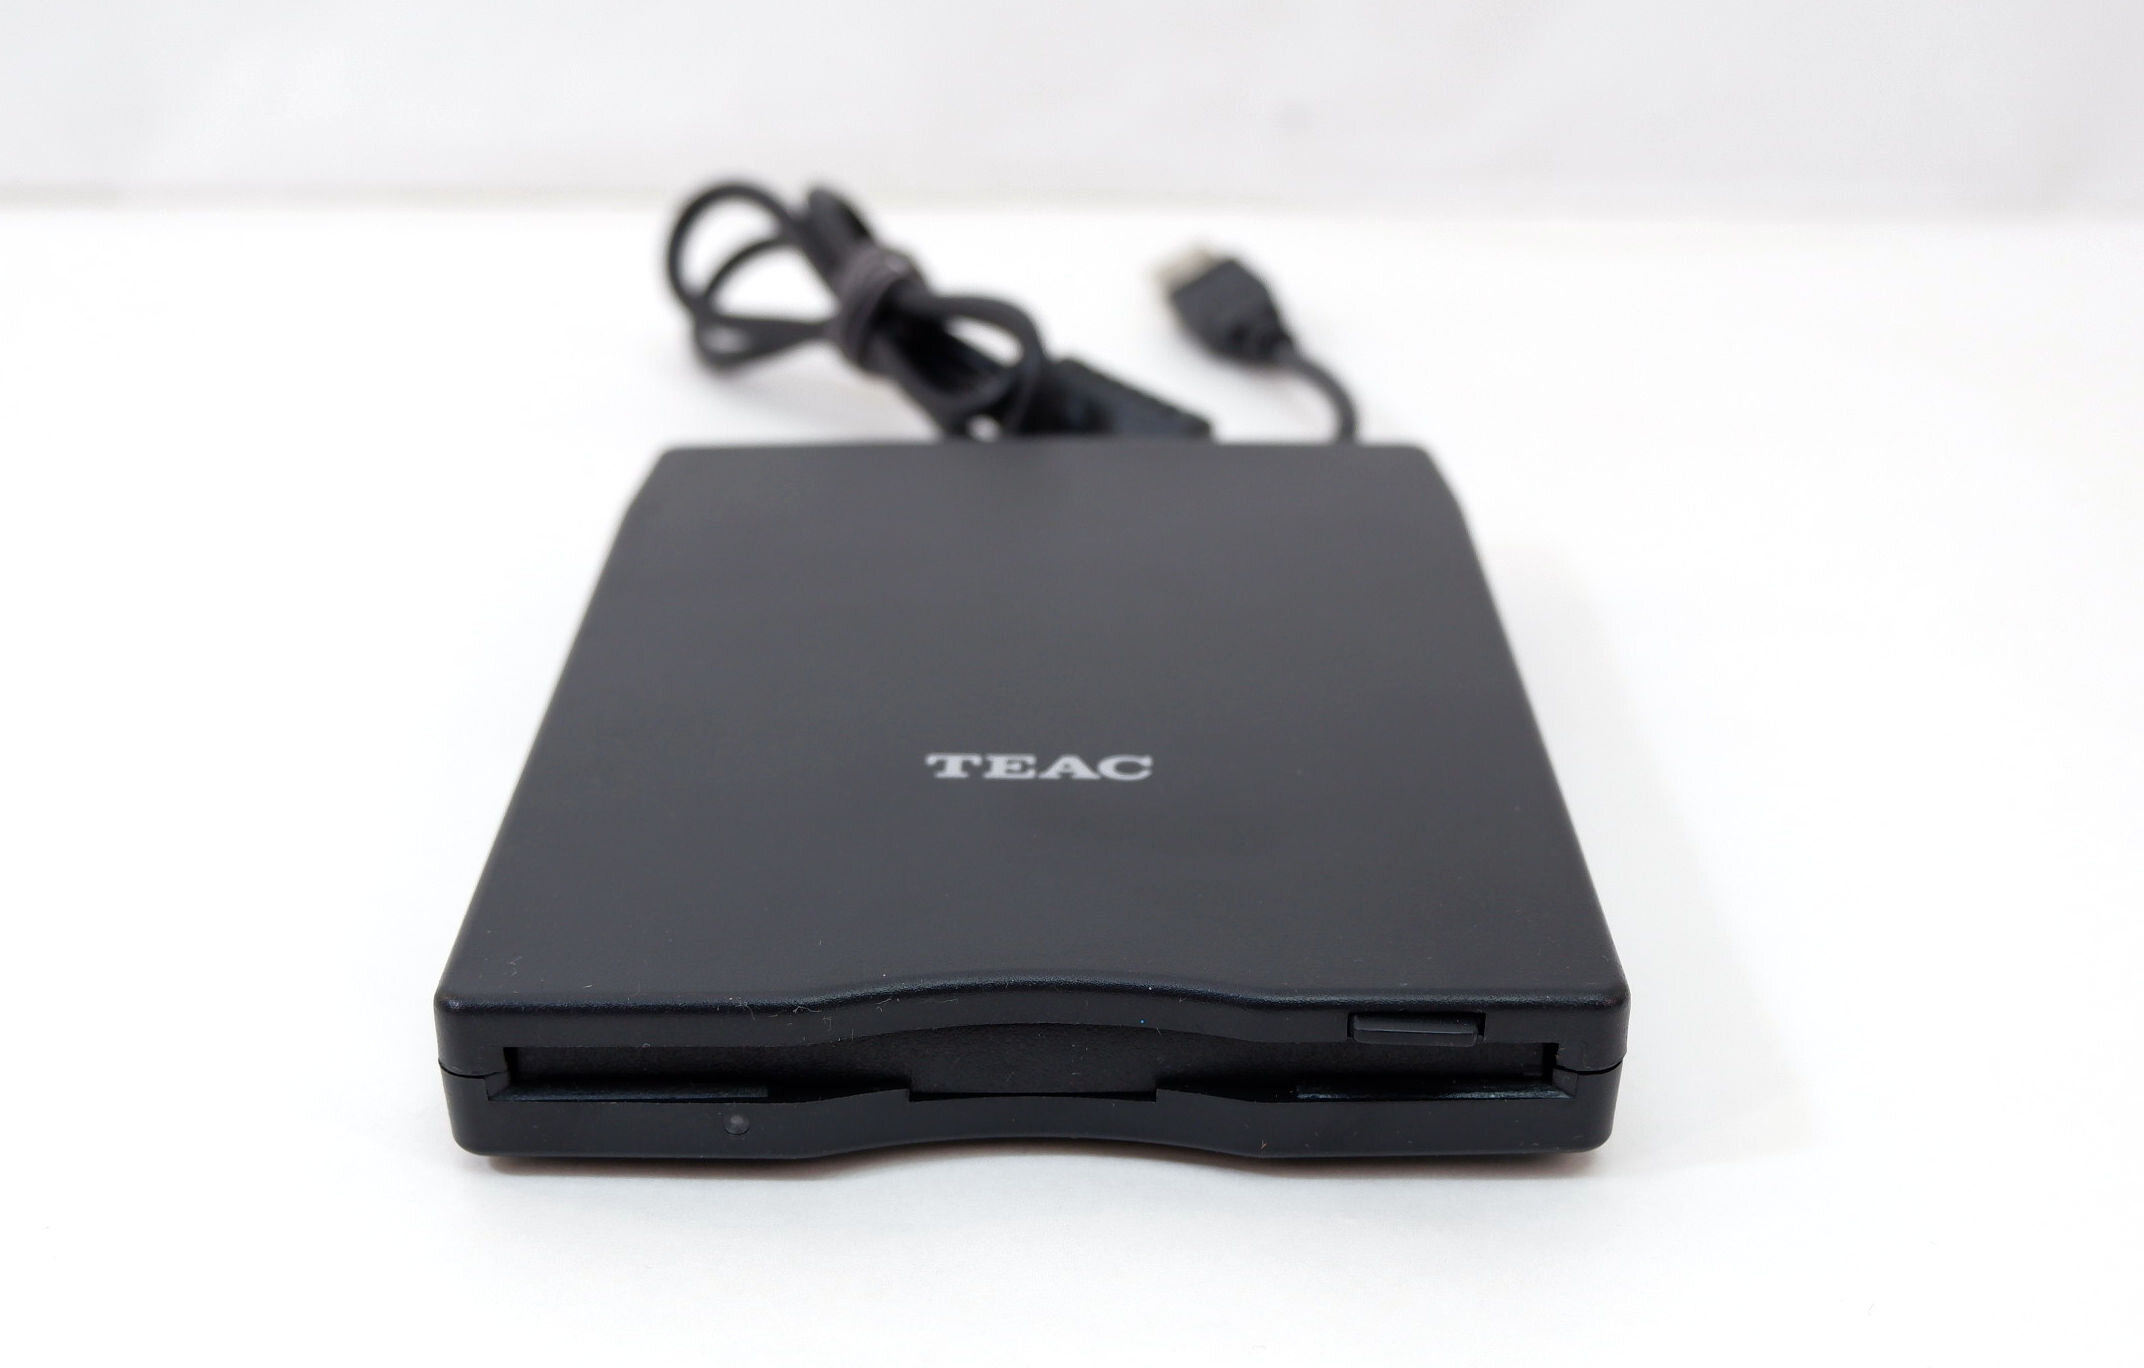 TEAC USB дисковод для дискет